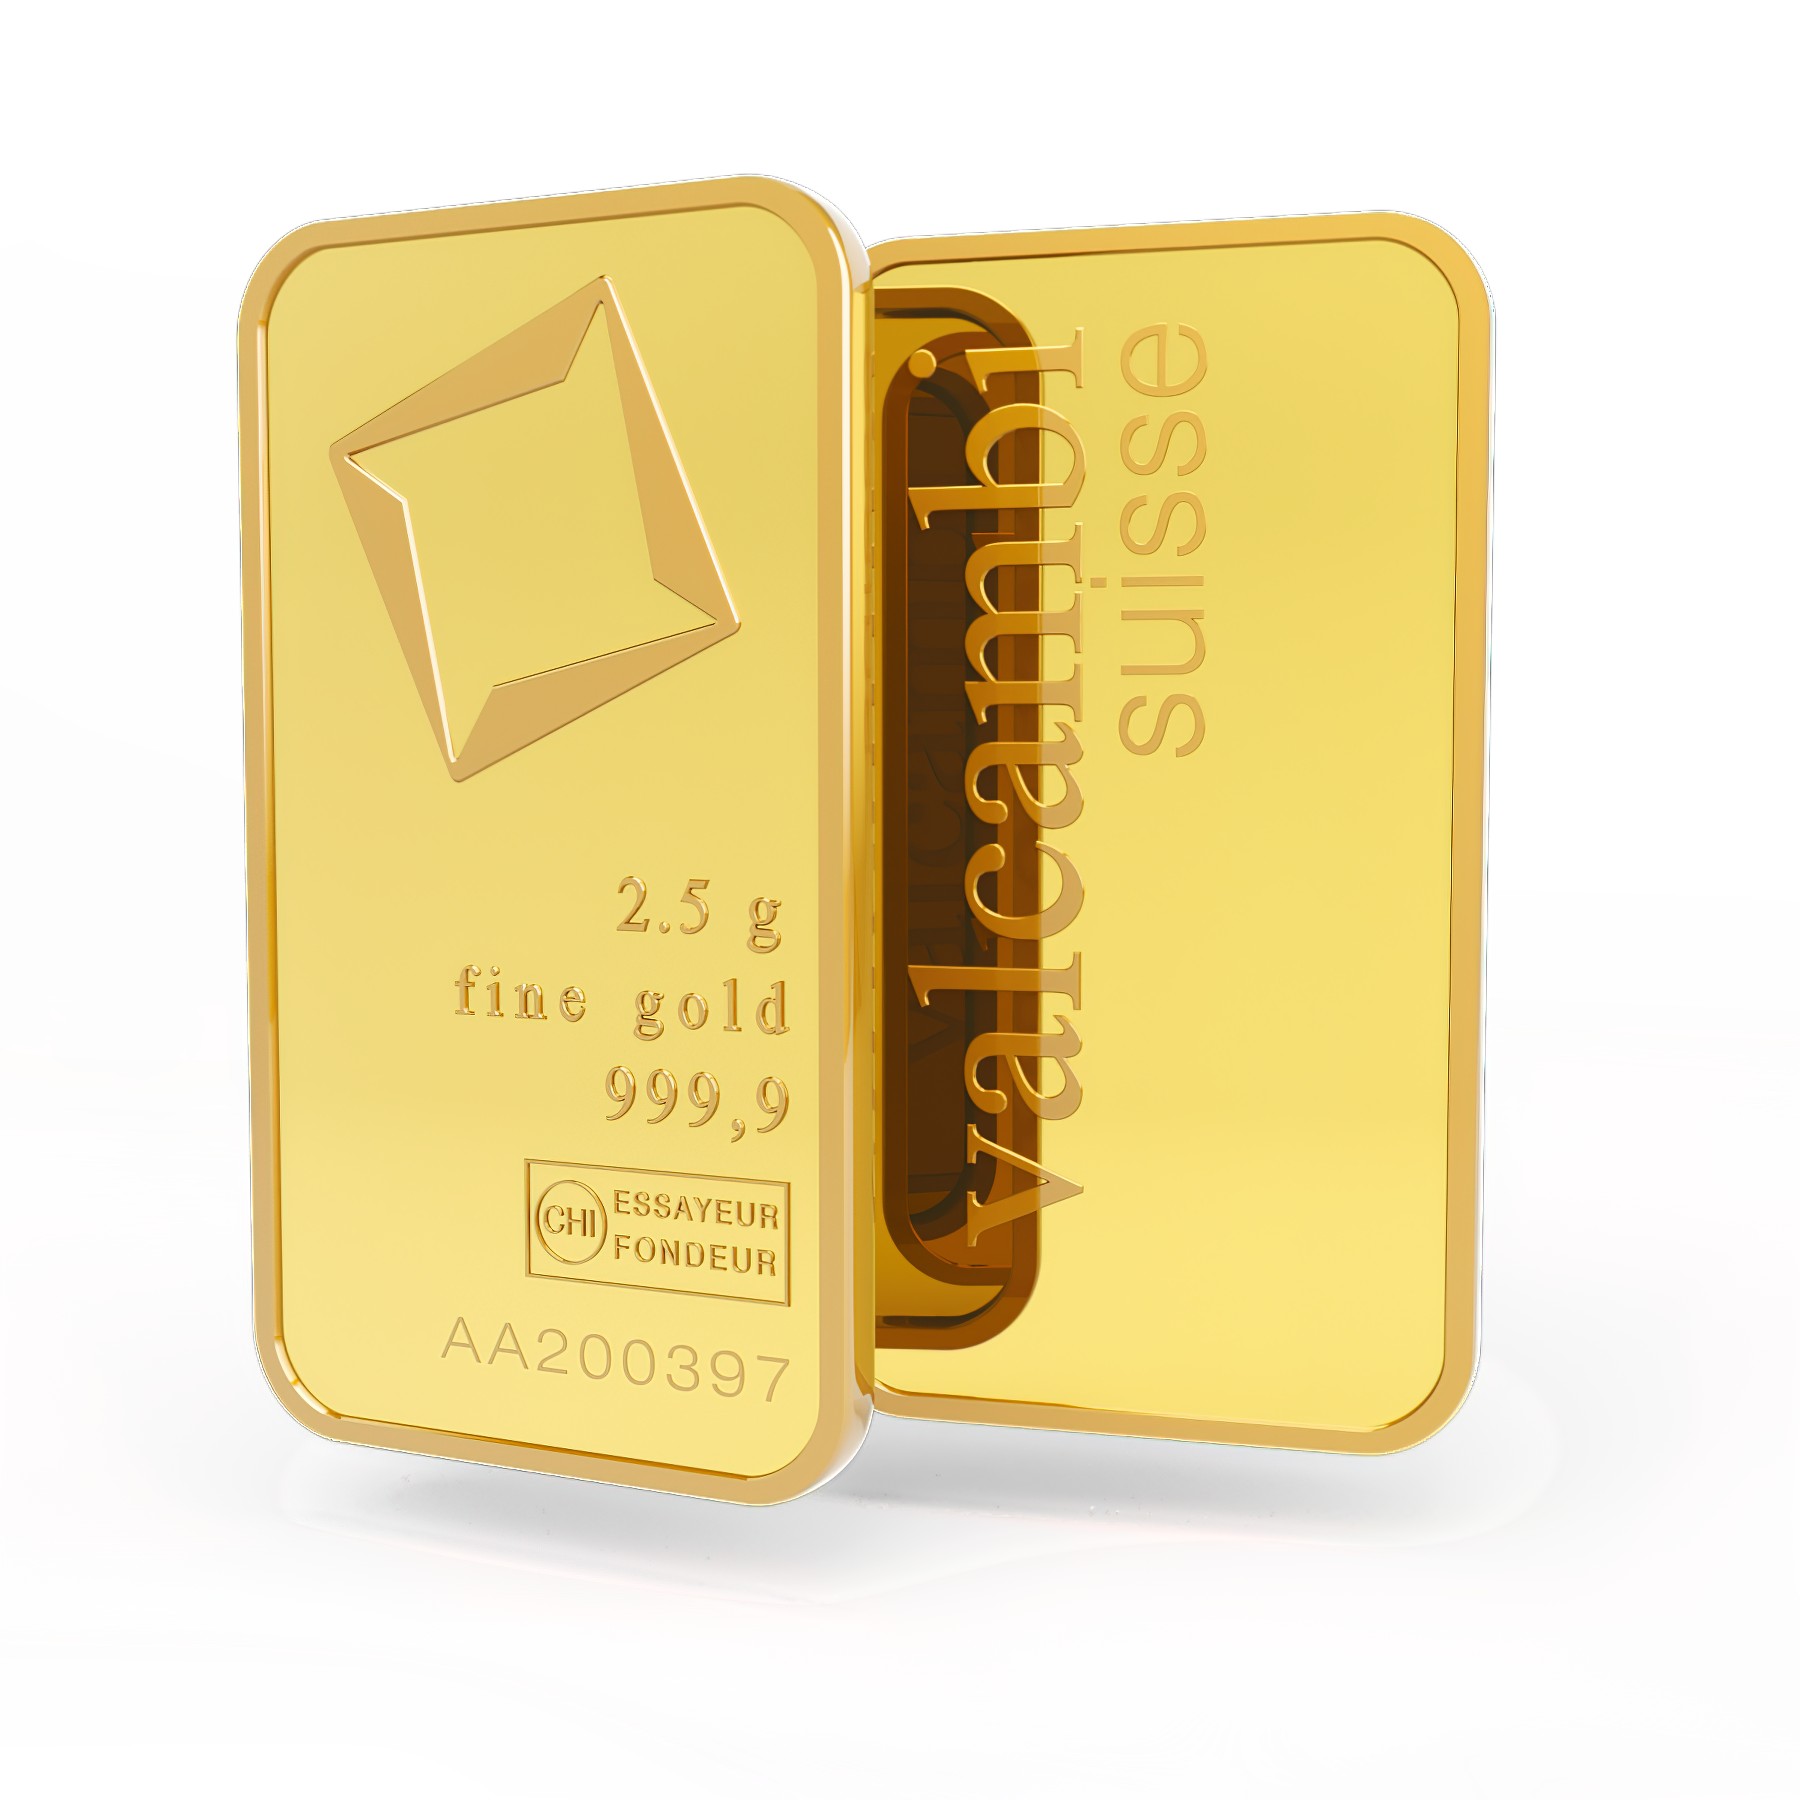 Aranyrúd 2.5gr, Svájc, Fine Gold 999,9